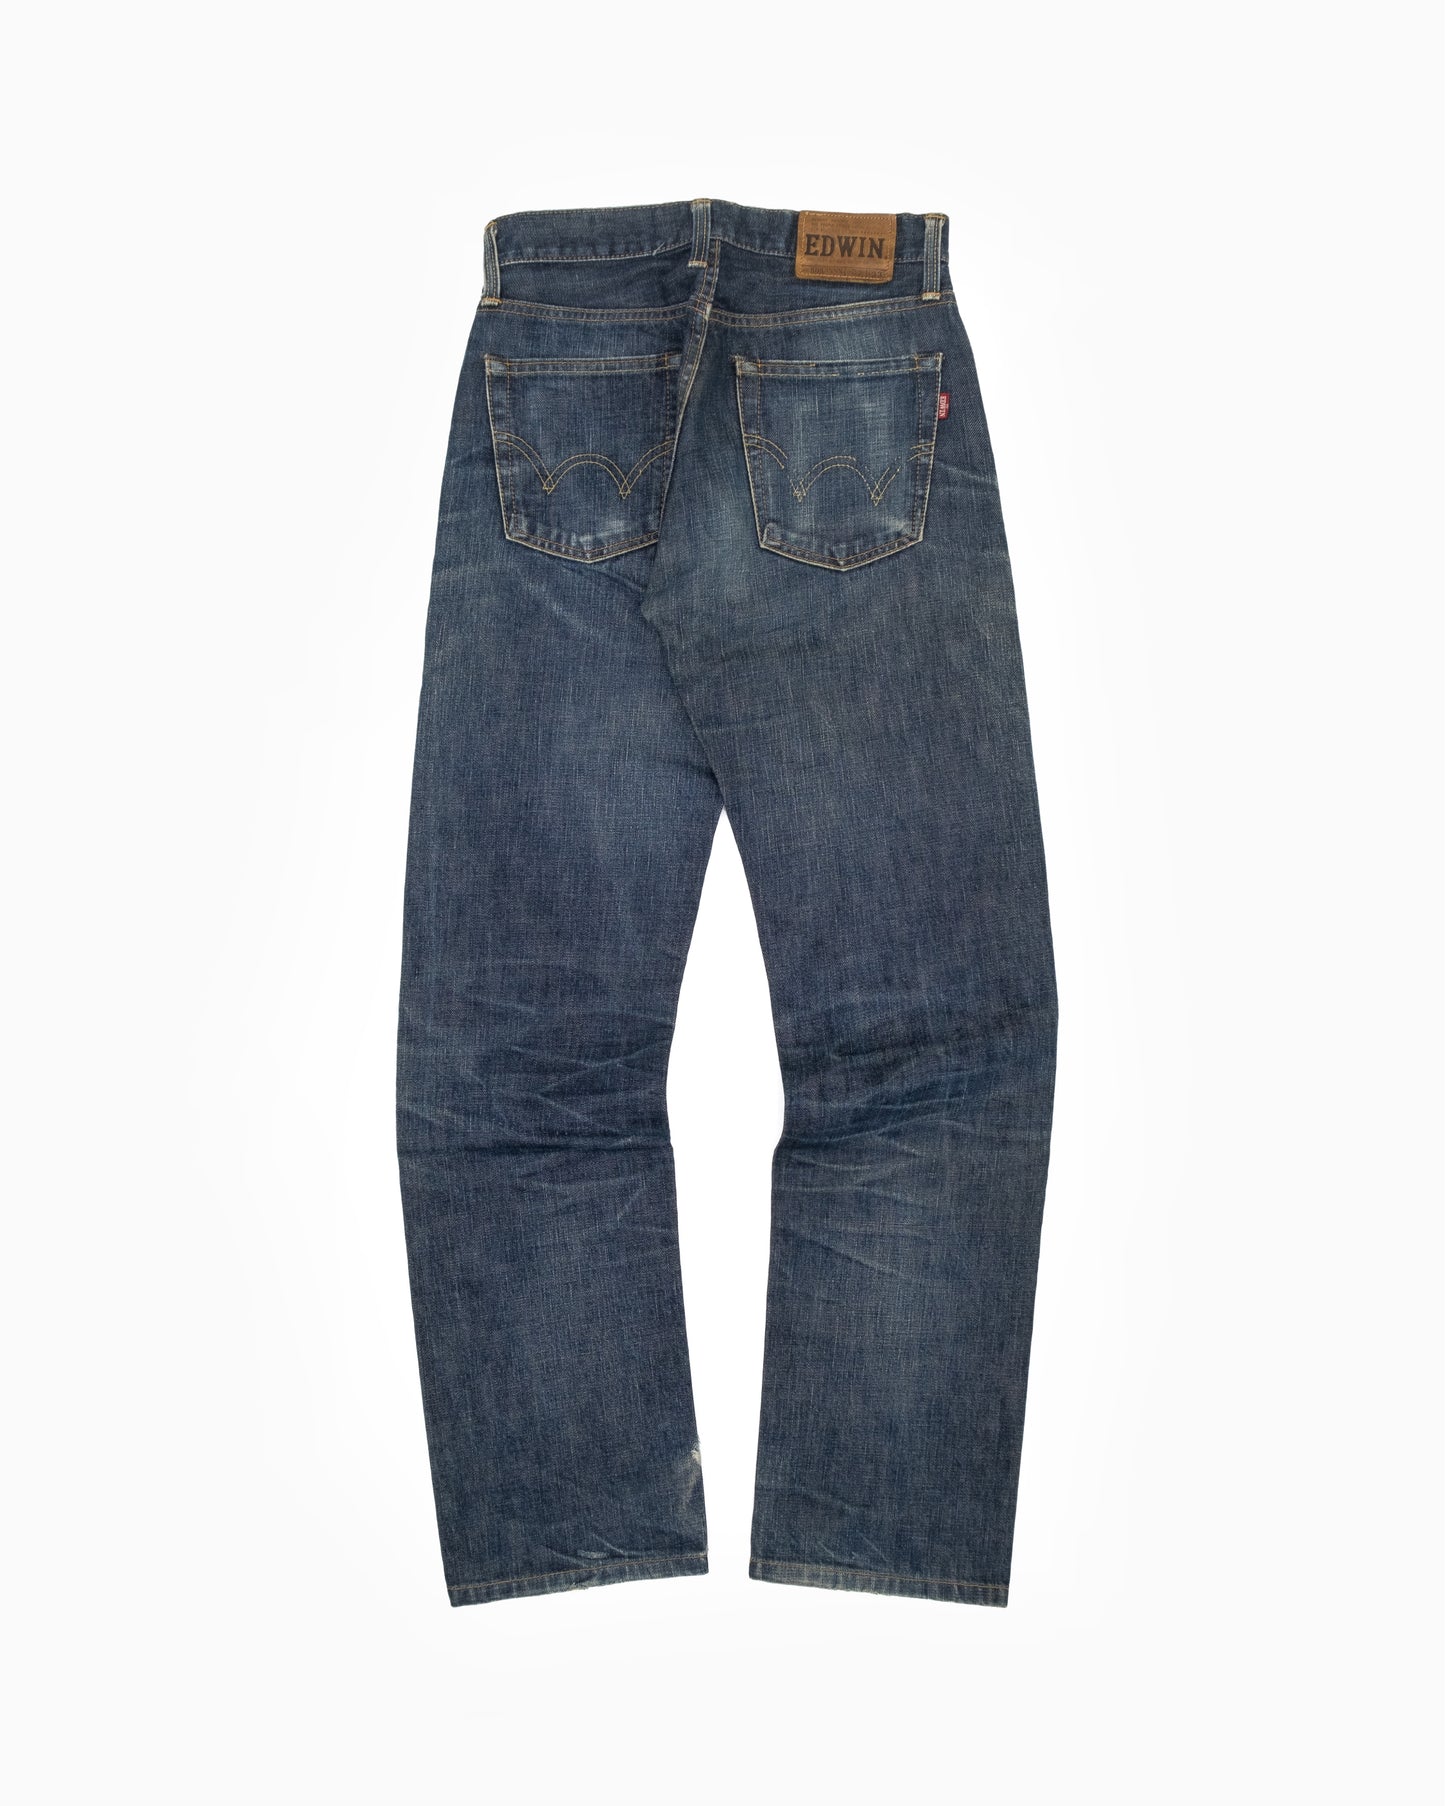 Edwin 505SXXX Selvedge Denim Jeans